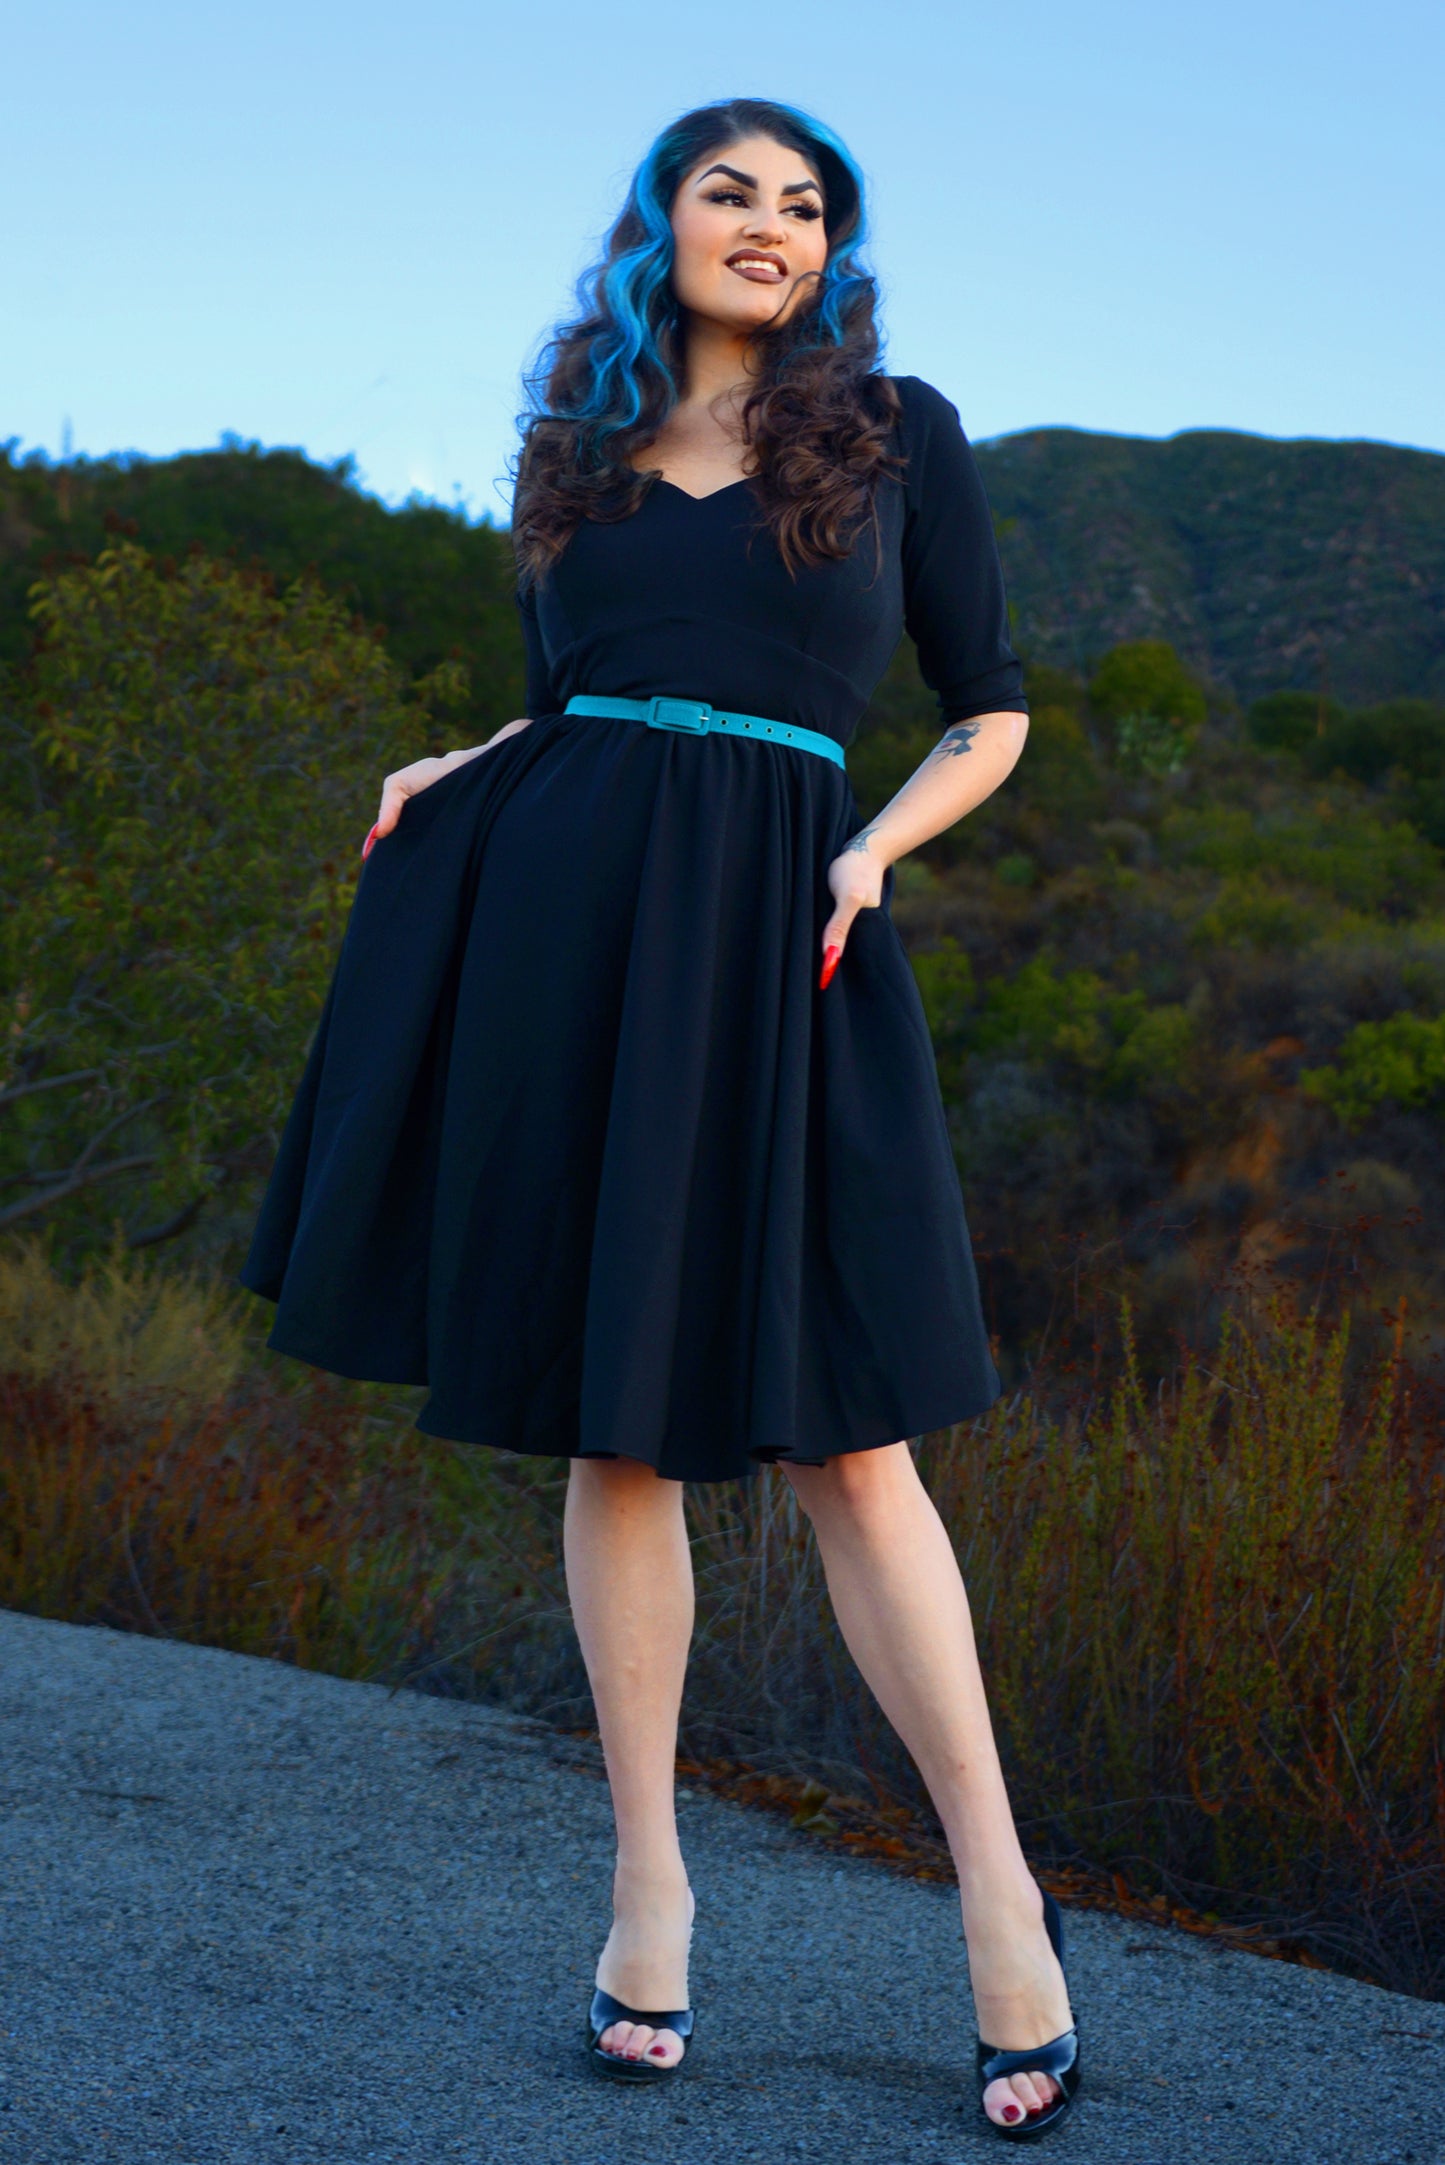 Priscilla Swing Dress in Black | Laura Byrnes Design